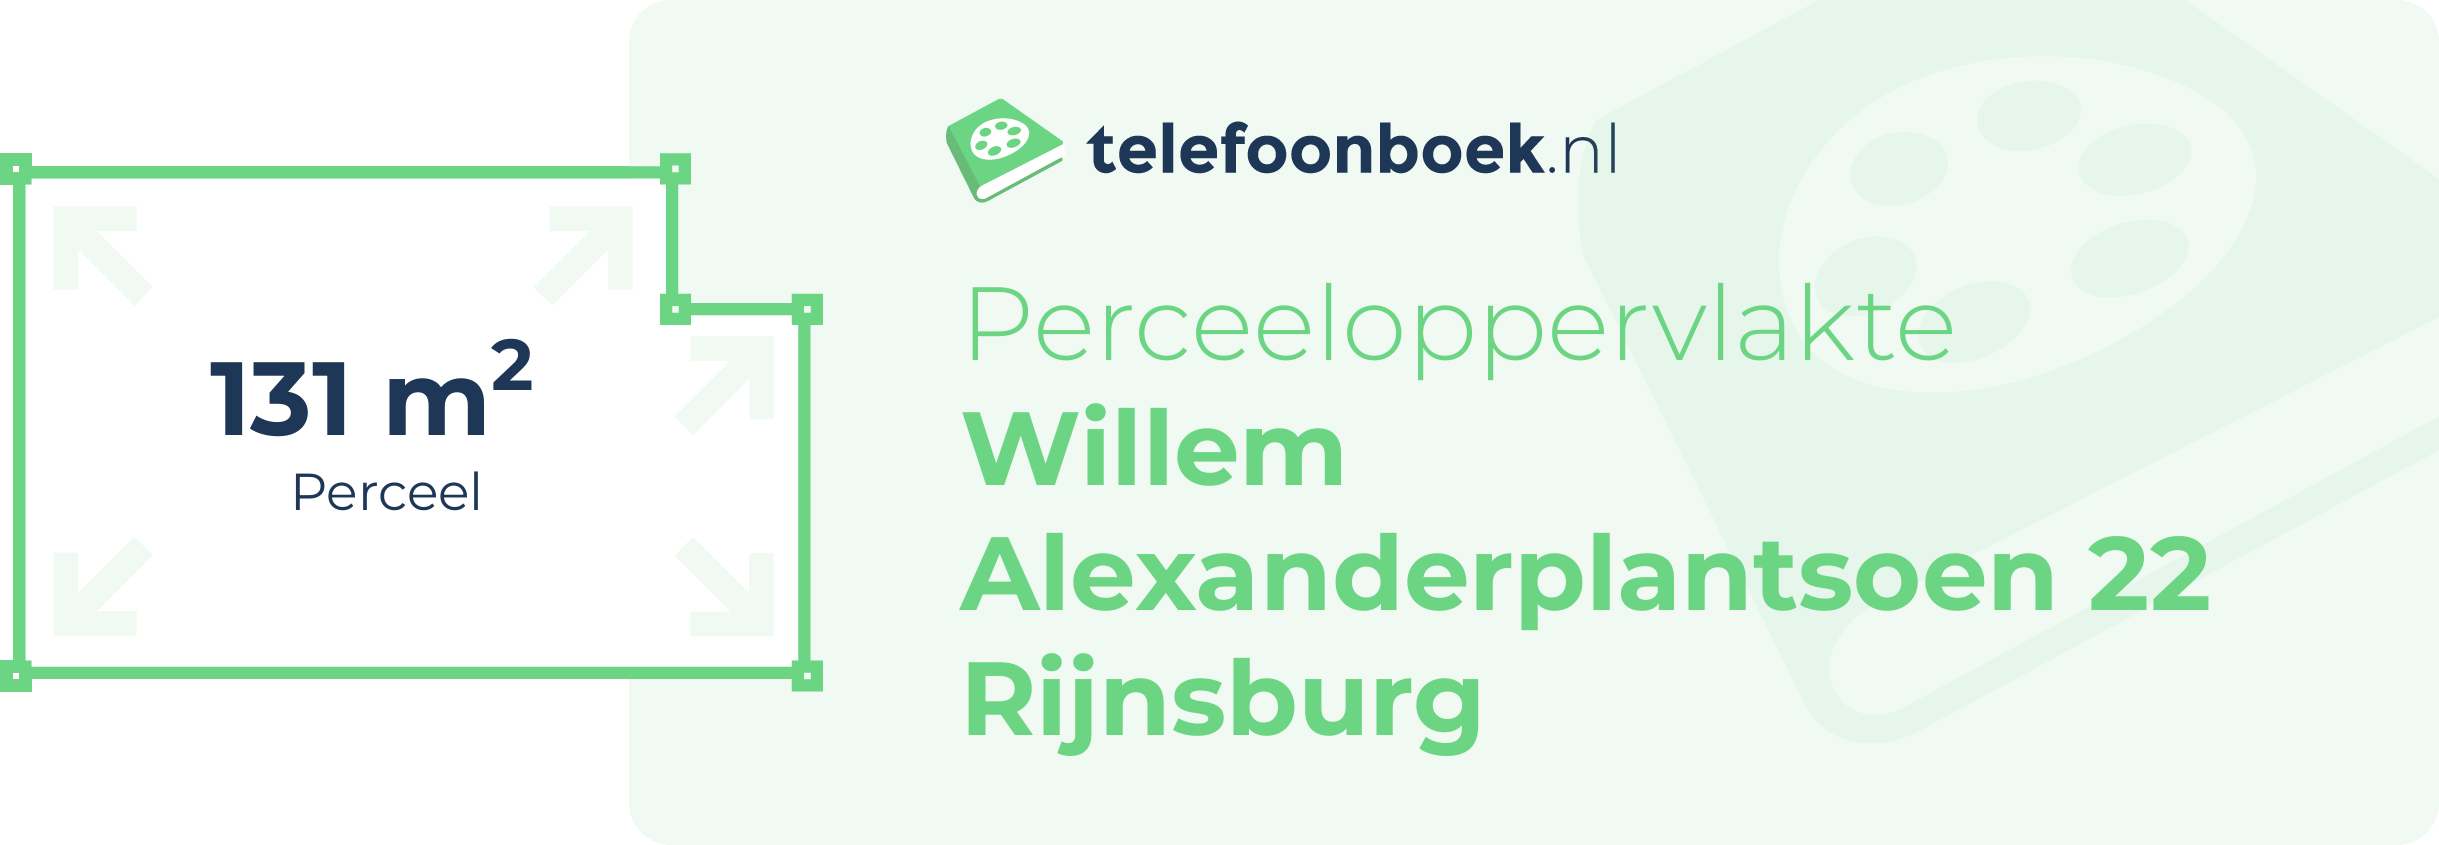 Perceeloppervlakte Willem Alexanderplantsoen 22 Rijnsburg